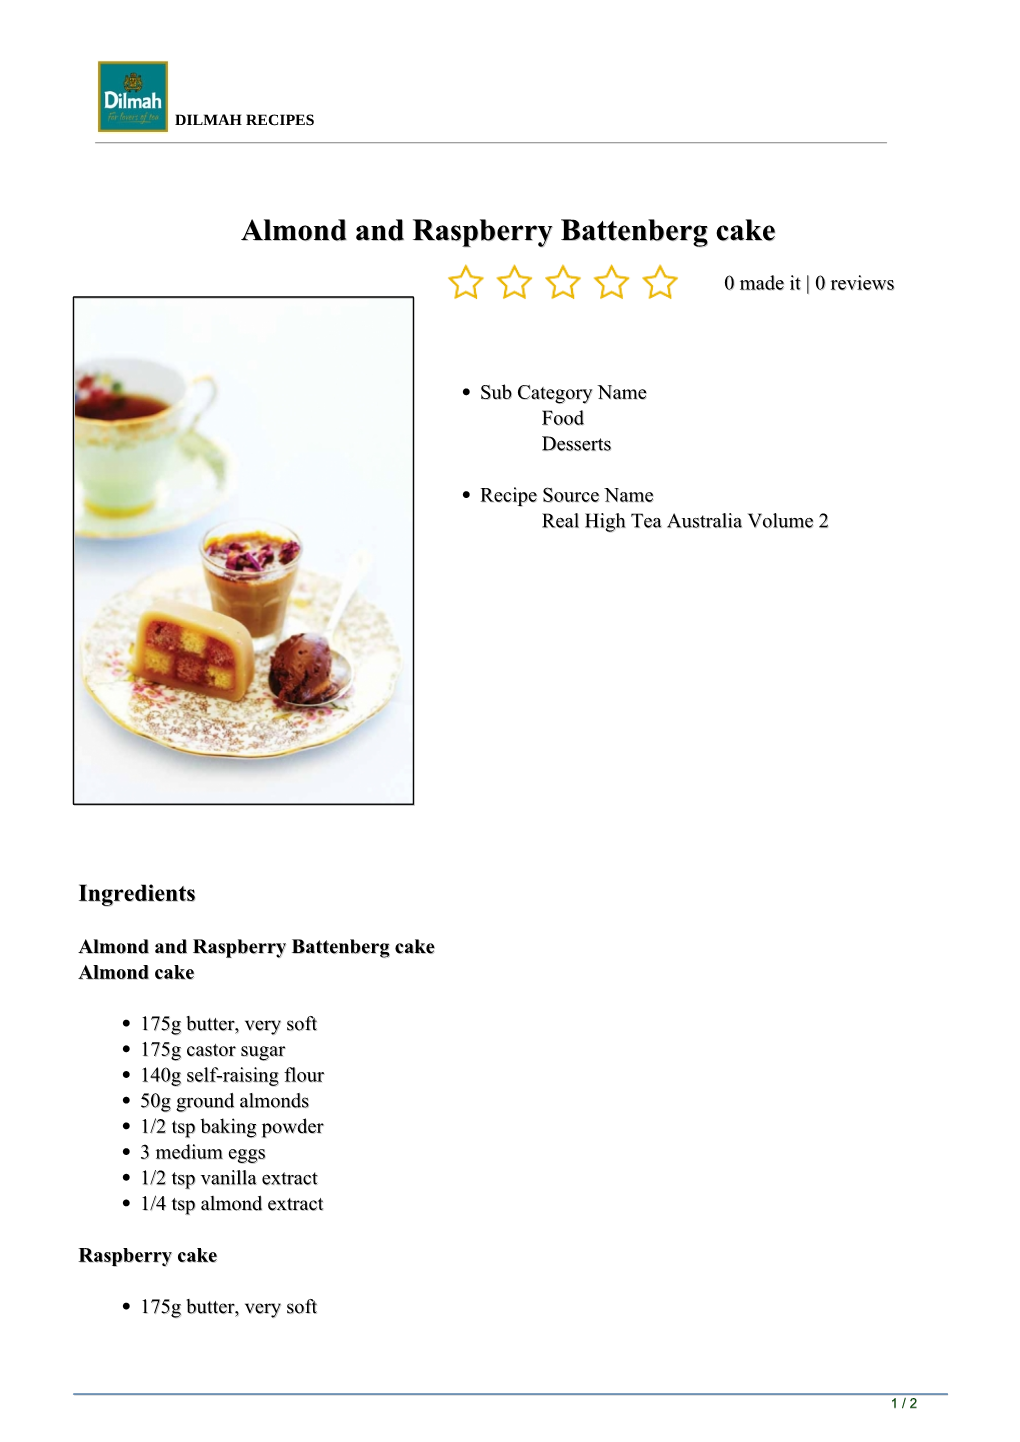 Almond and Raspberry Battenberg Cake